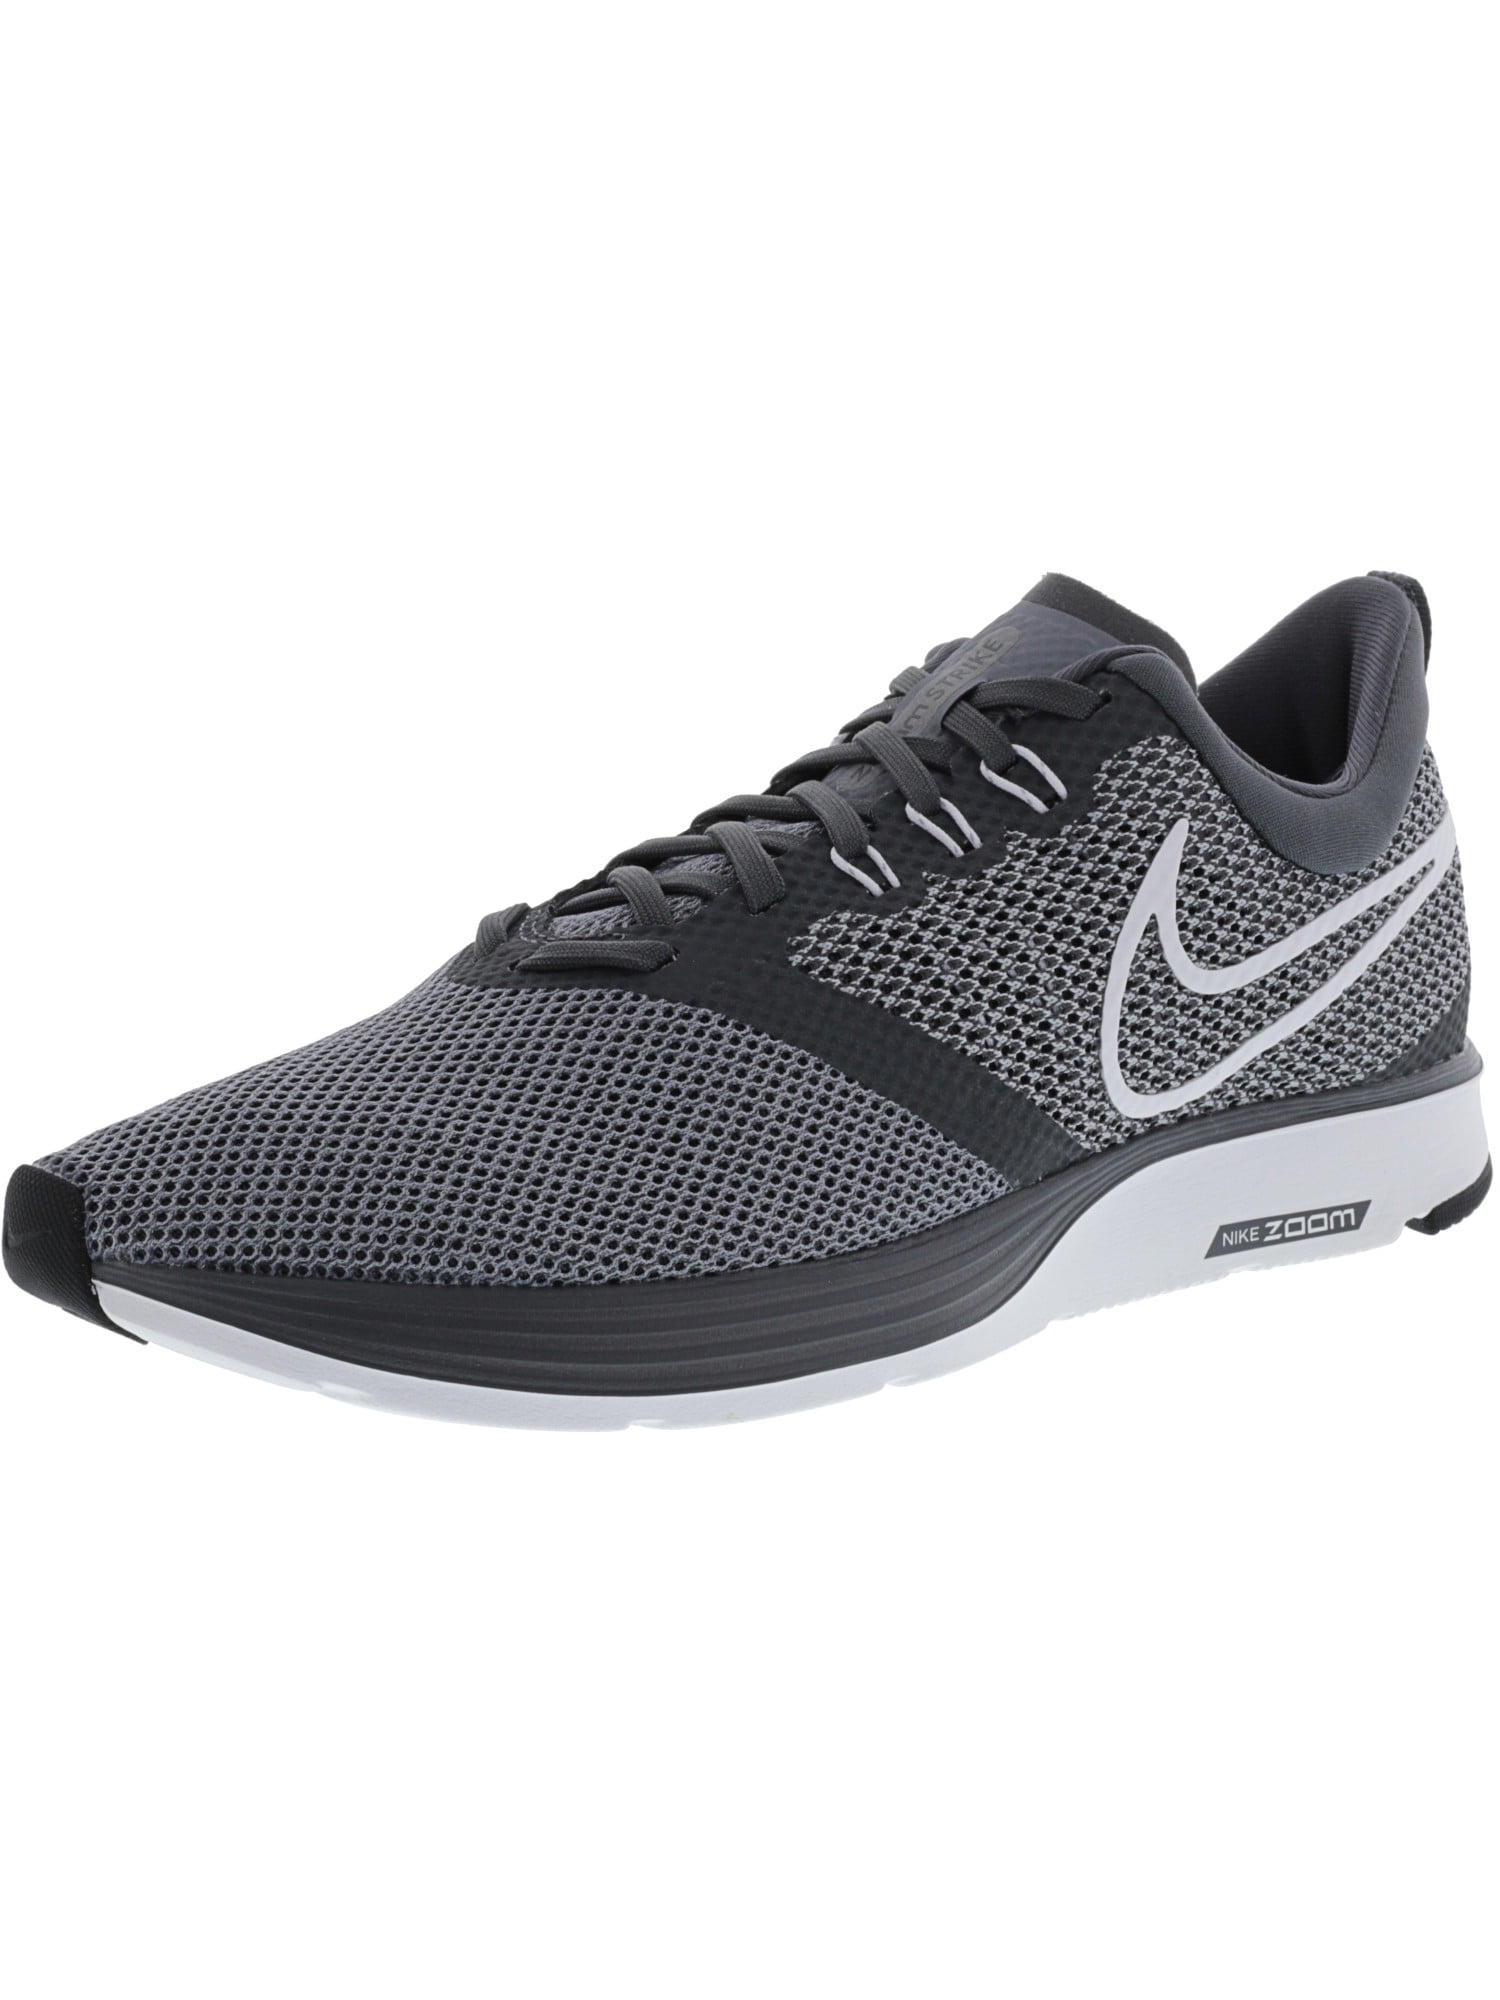 Nike Men's Dark Grey / White - Stealth Black Ankle-High Mesh Shoe 8M - Walmart.com